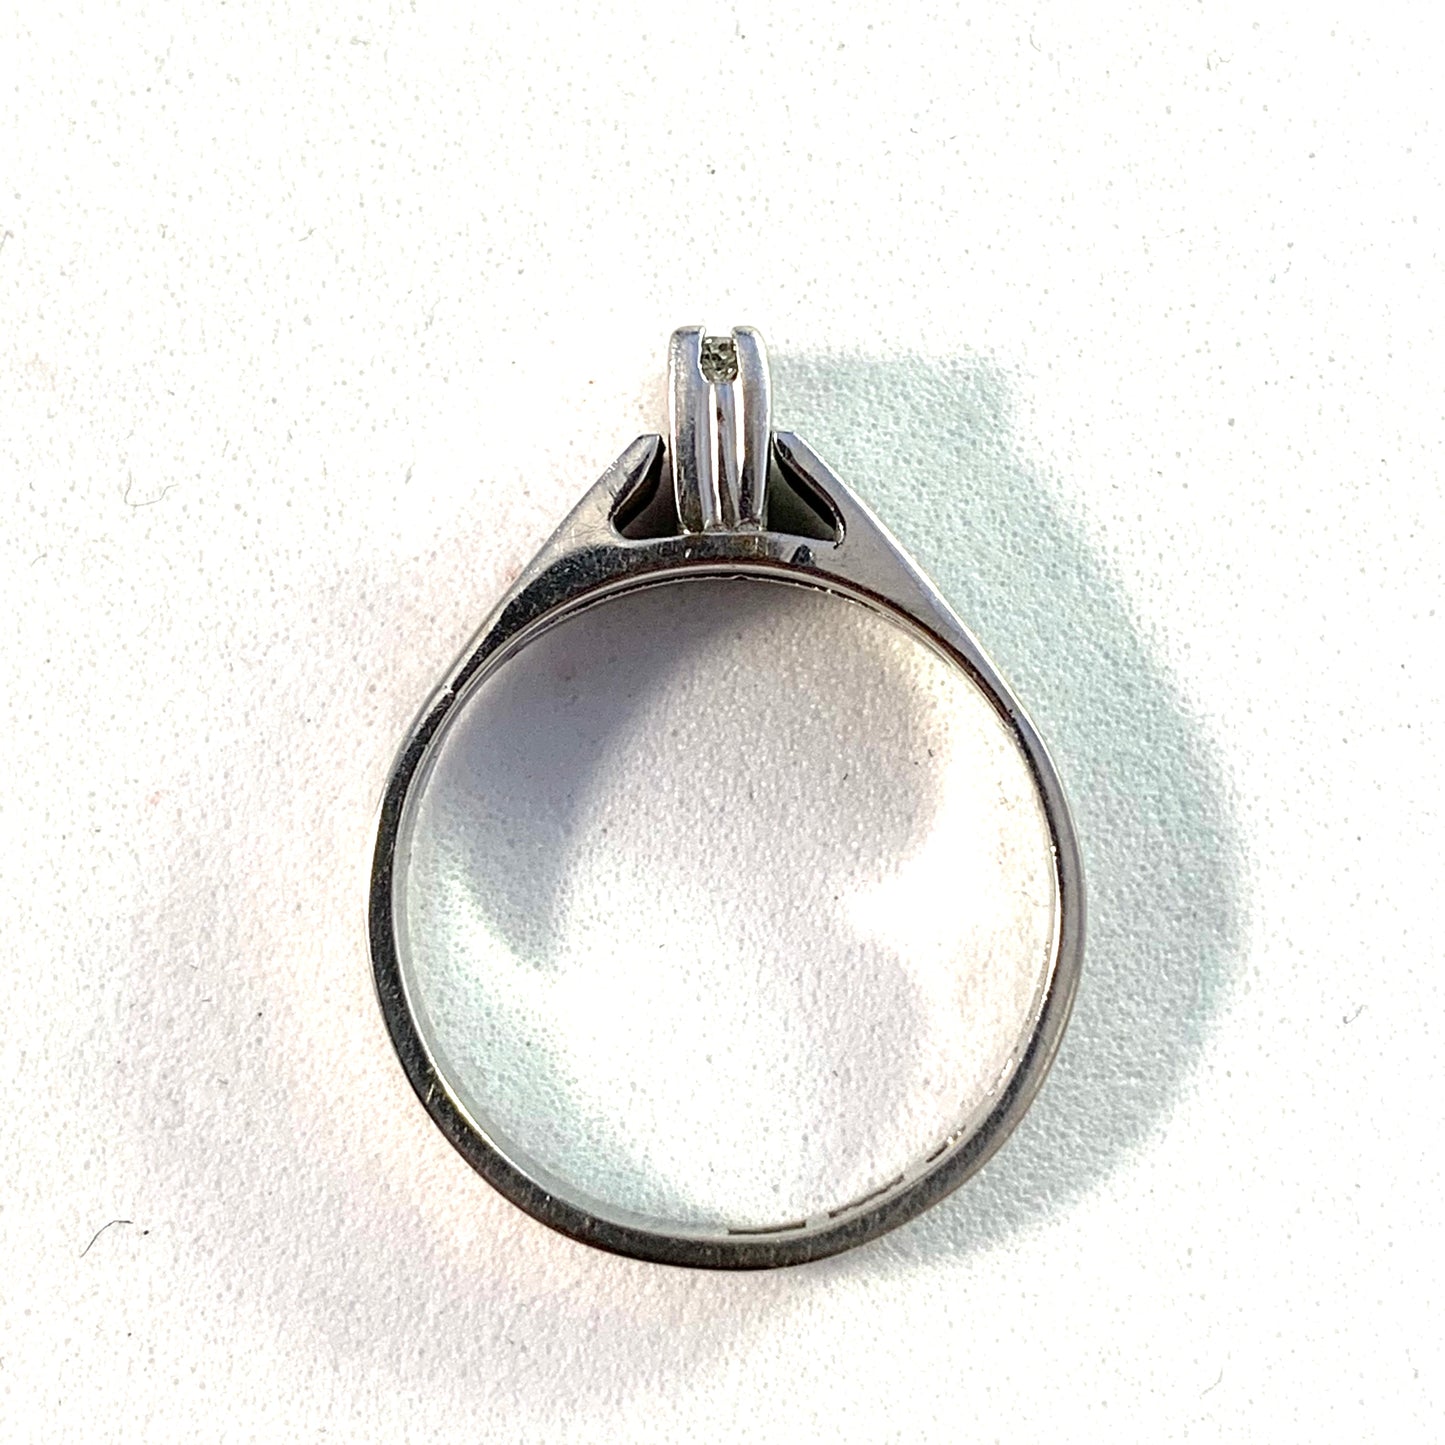 Rolf Nilsson, Sweden year 1976 Vintage 18k White Gold Diamond Engagement Ring.